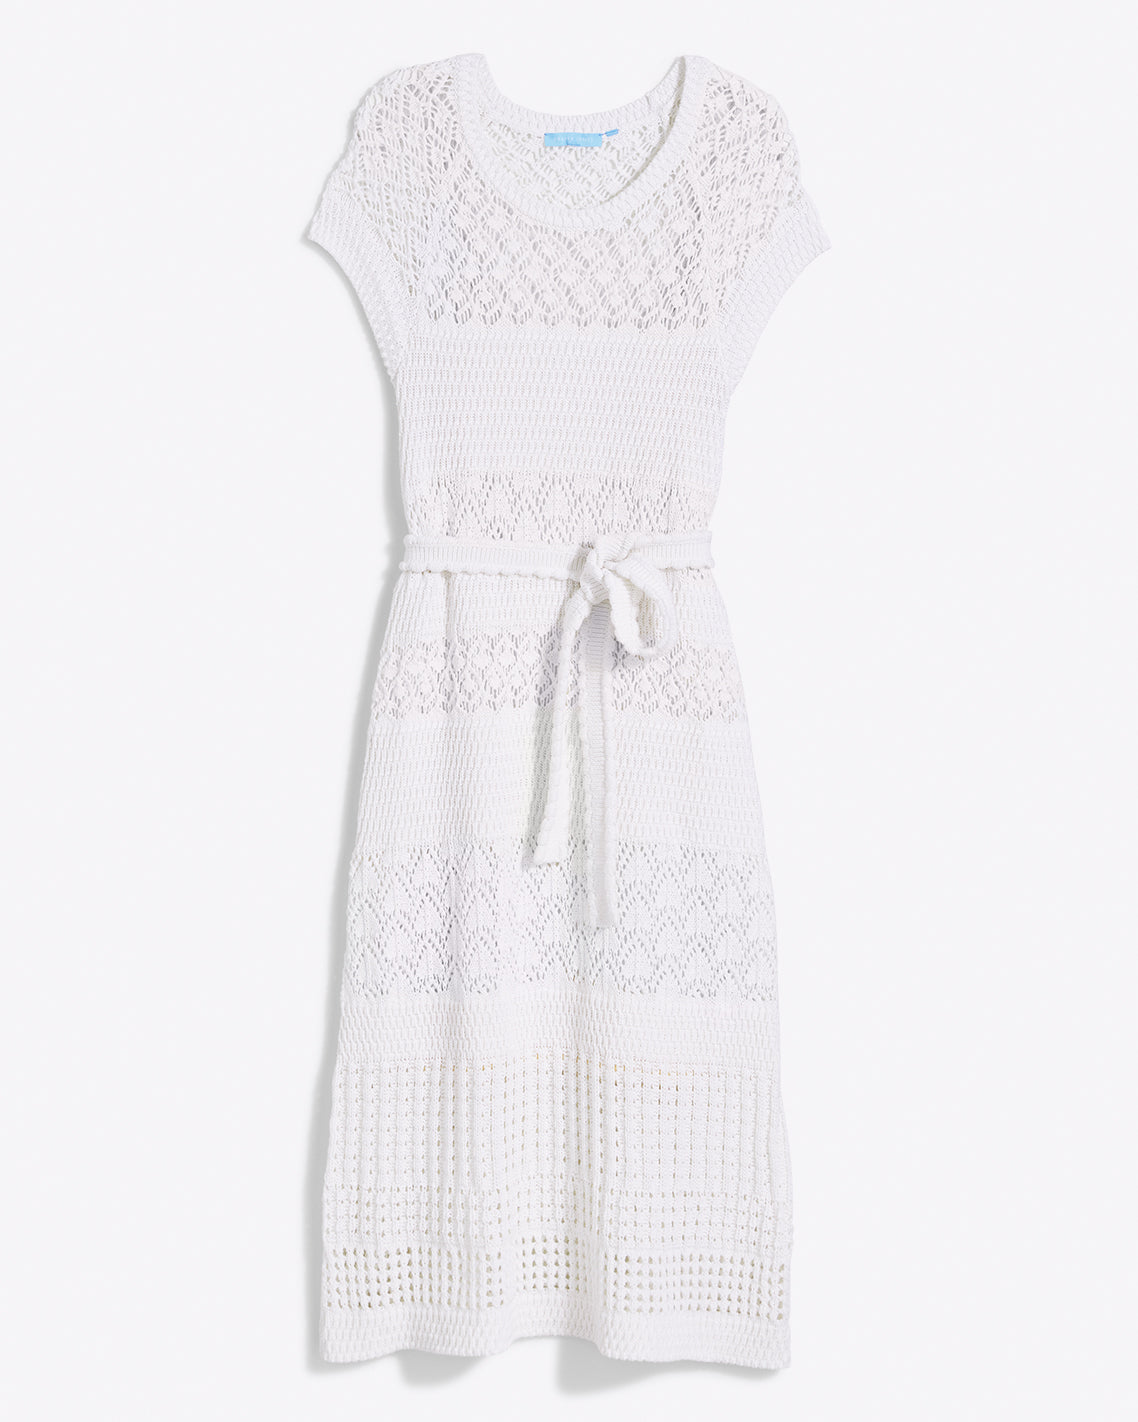 Crochet Midi Dress in White